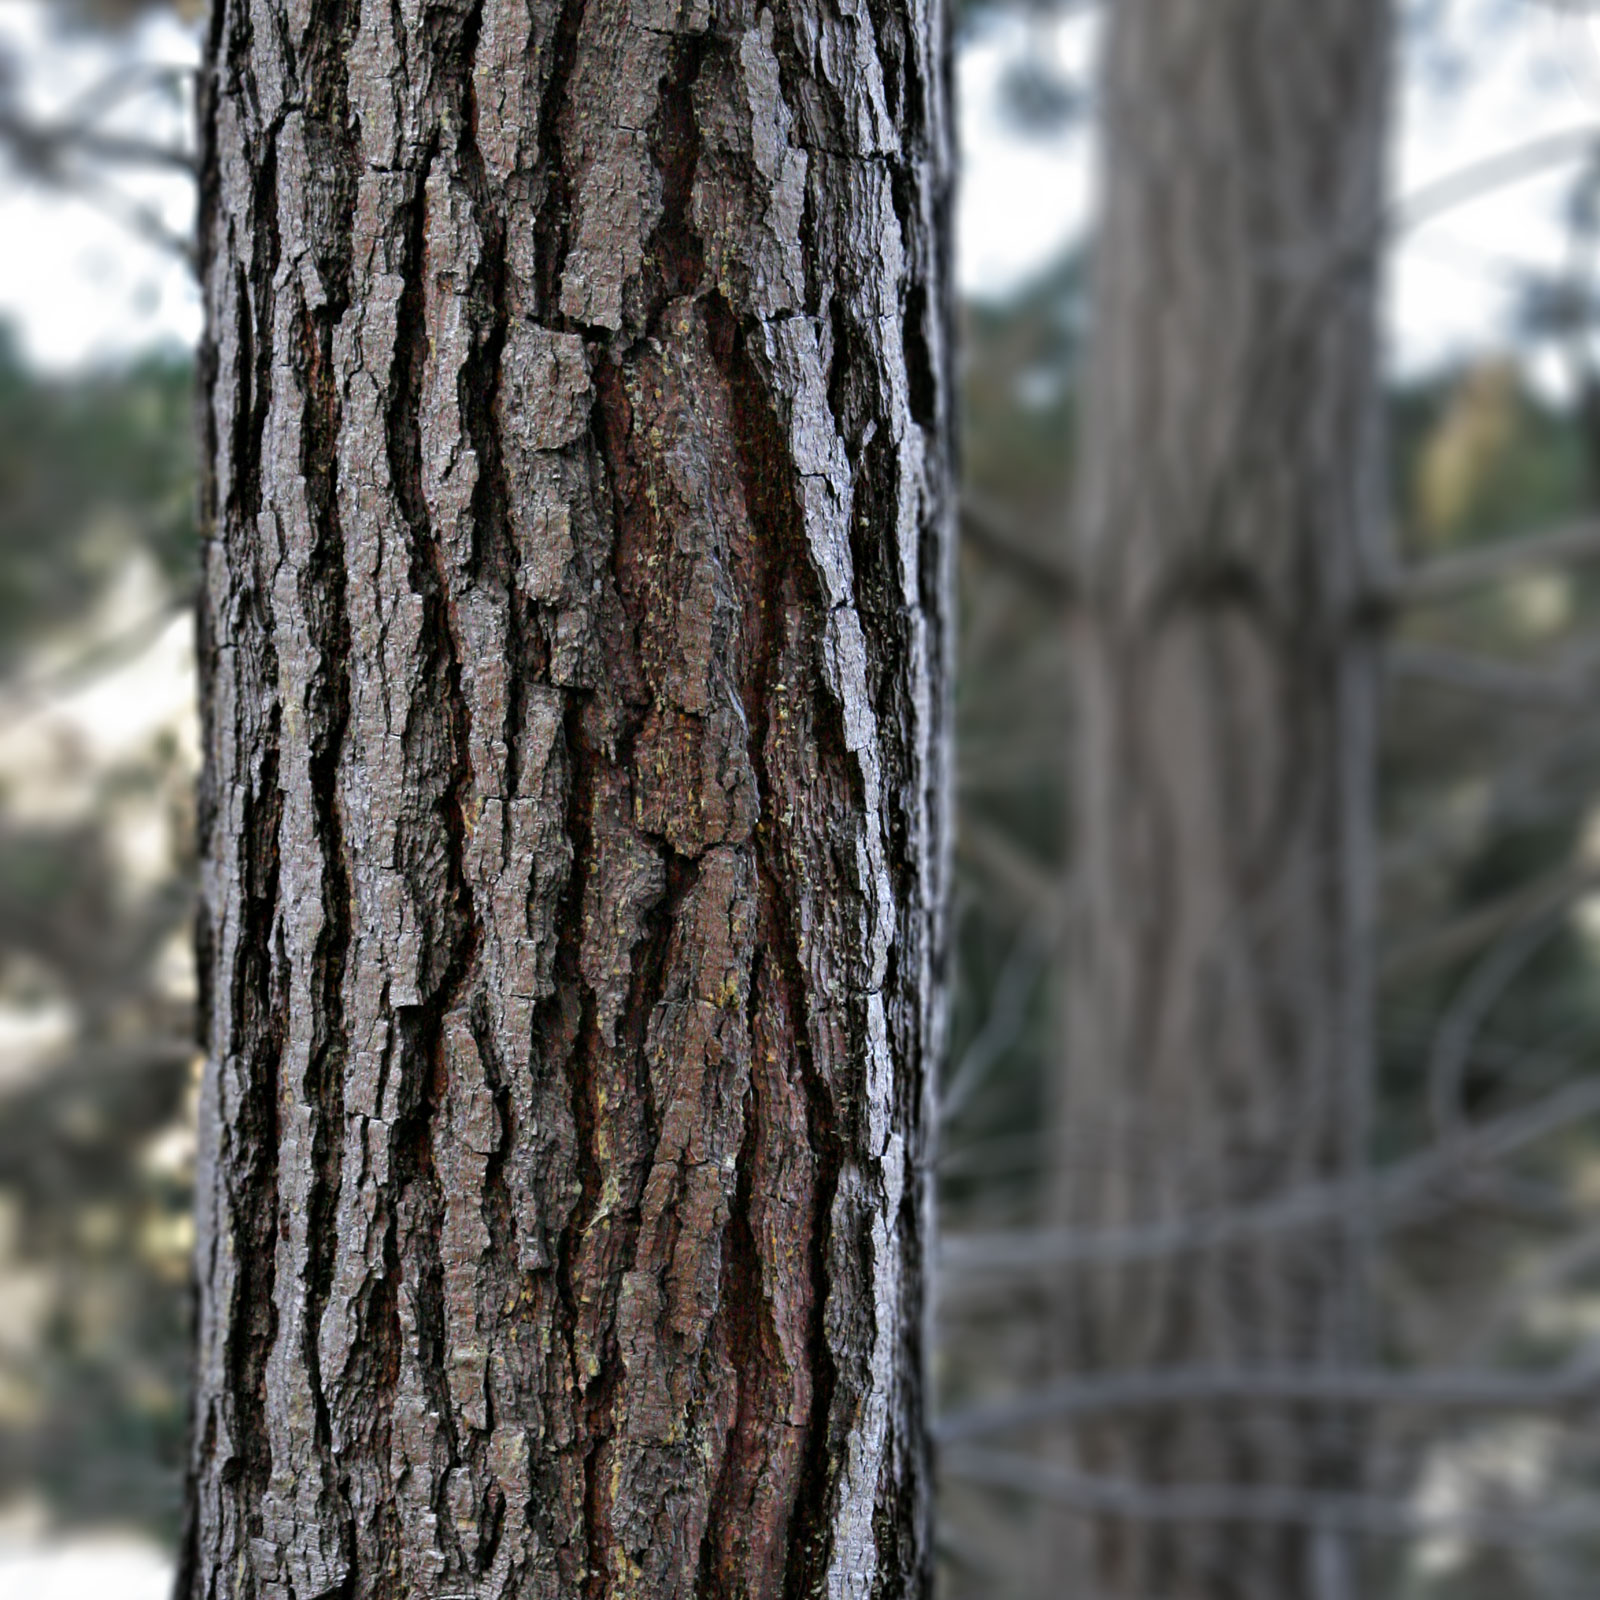 https://upload.wikimedia.org/wikipedia/commons/e/e6/Pine_bark.jpg